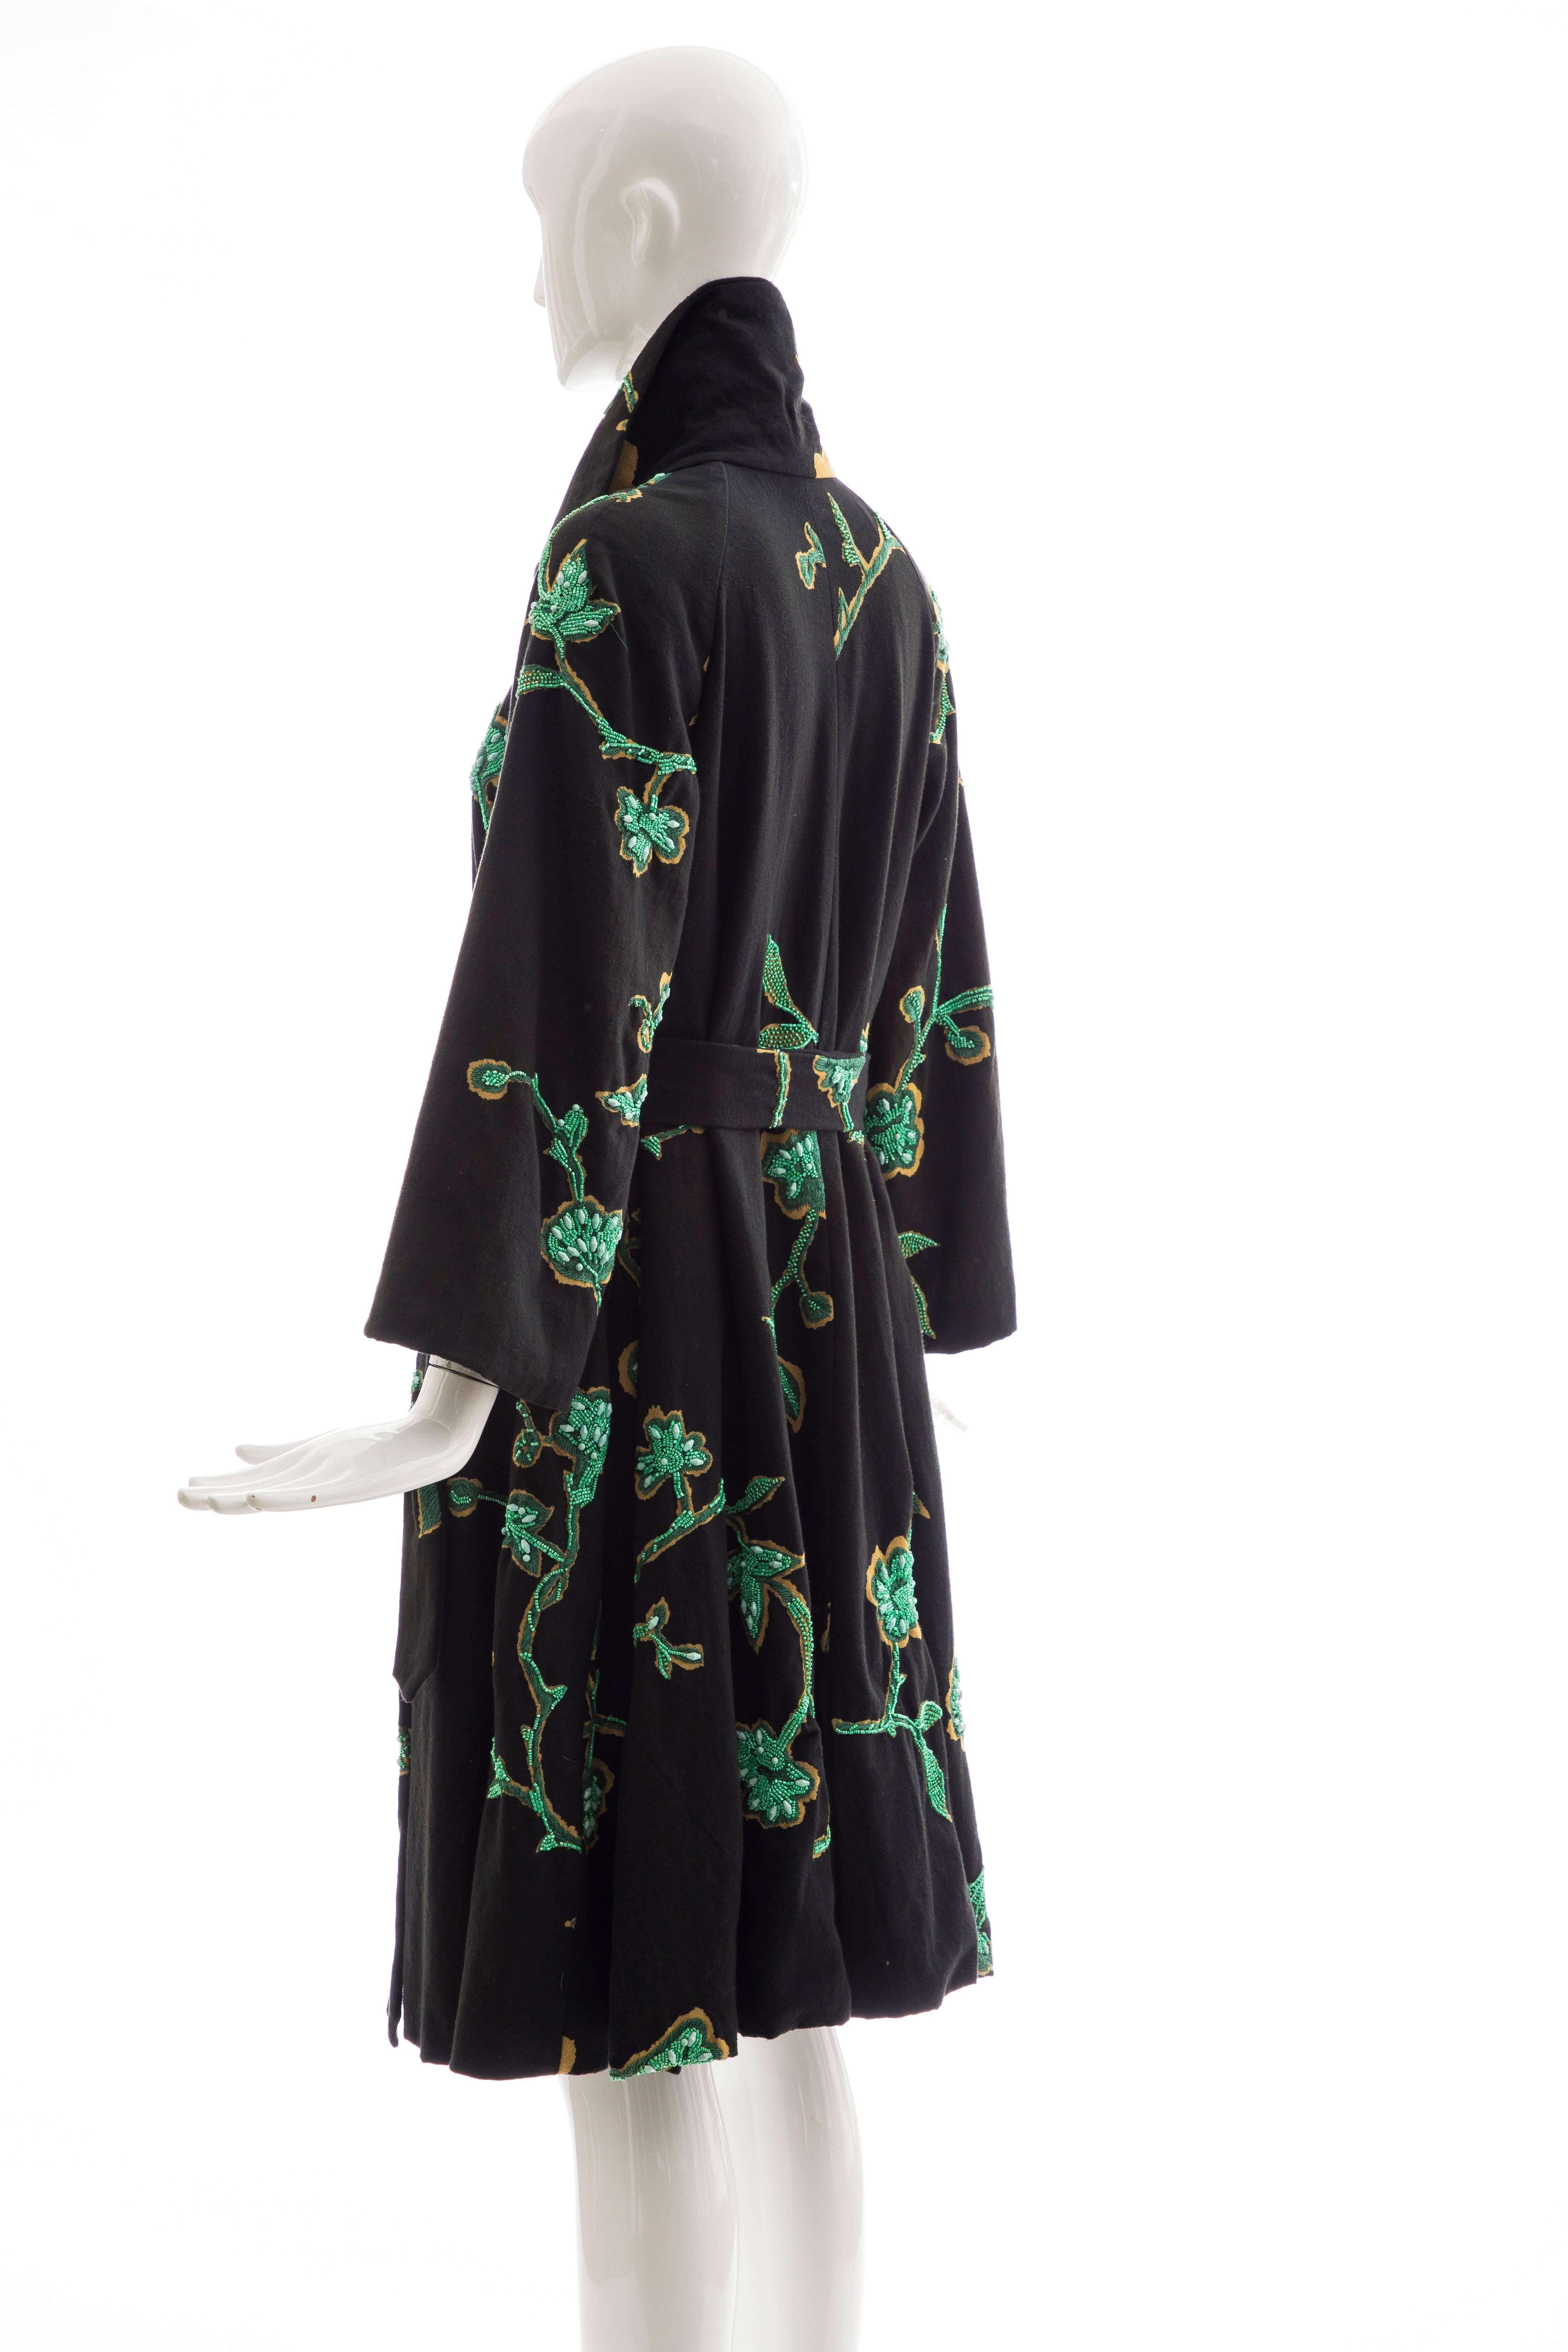 Dries Van Noten Runway Black Cotton Embroidered Beaded Coat, Fall 2005 For Sale 8